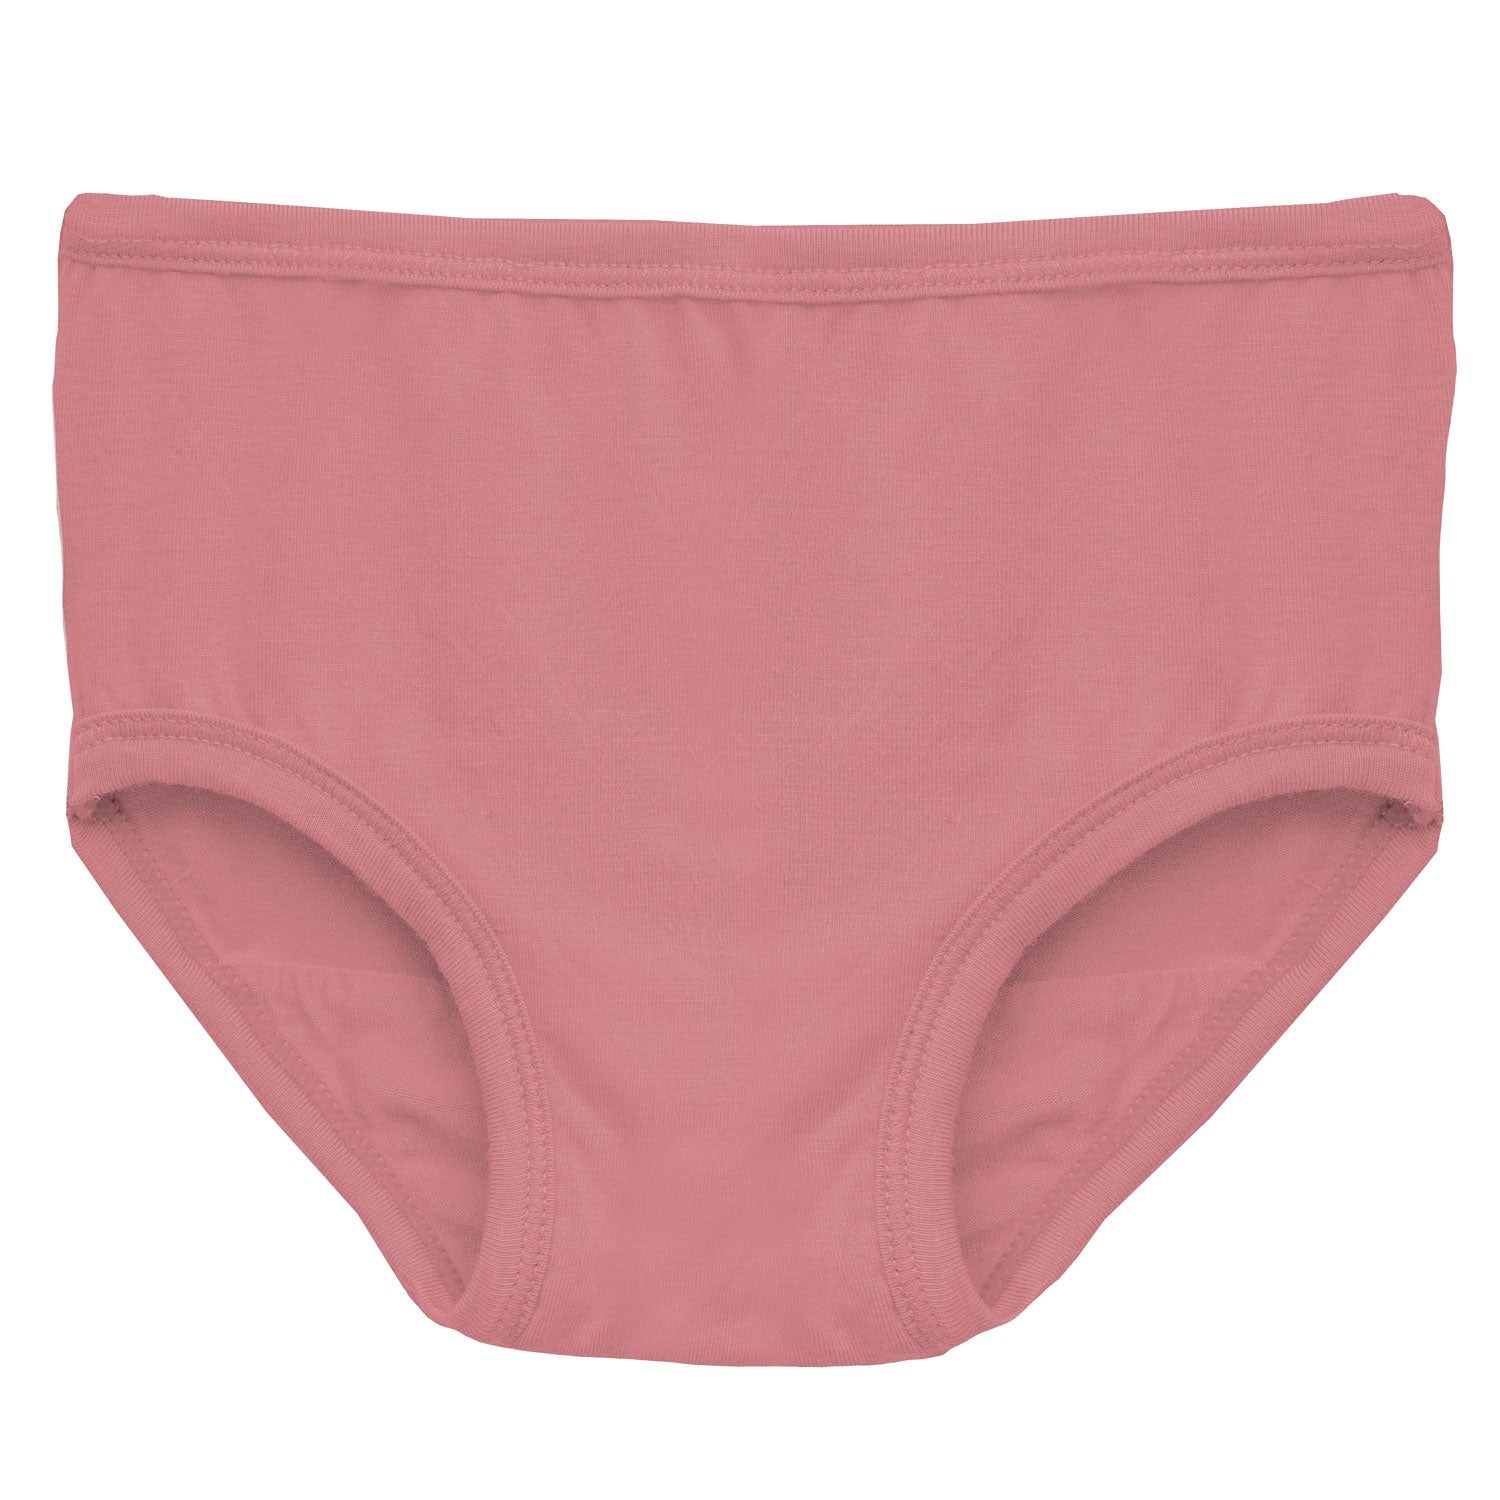 Kickee Pants Bamboo Girls Underwear Set - Desert Rose 